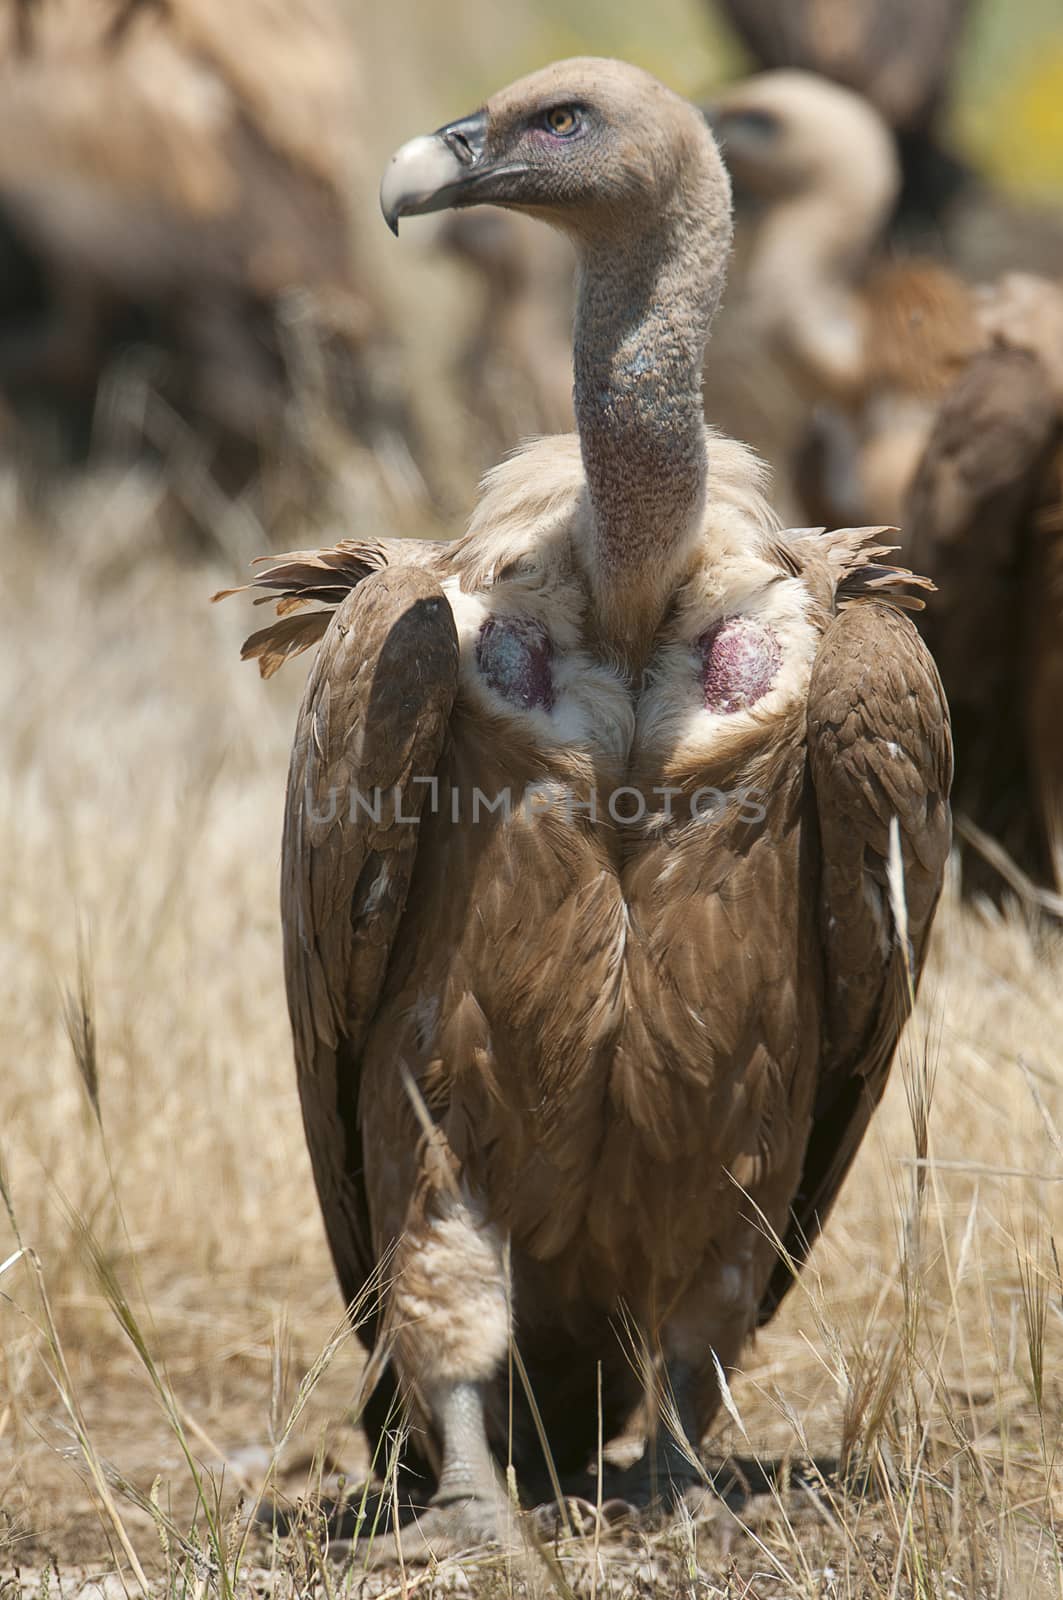 Griffon vulture, Gyps fulvus, raptor bird carrion portrait  by jalonsohu@gmail.com